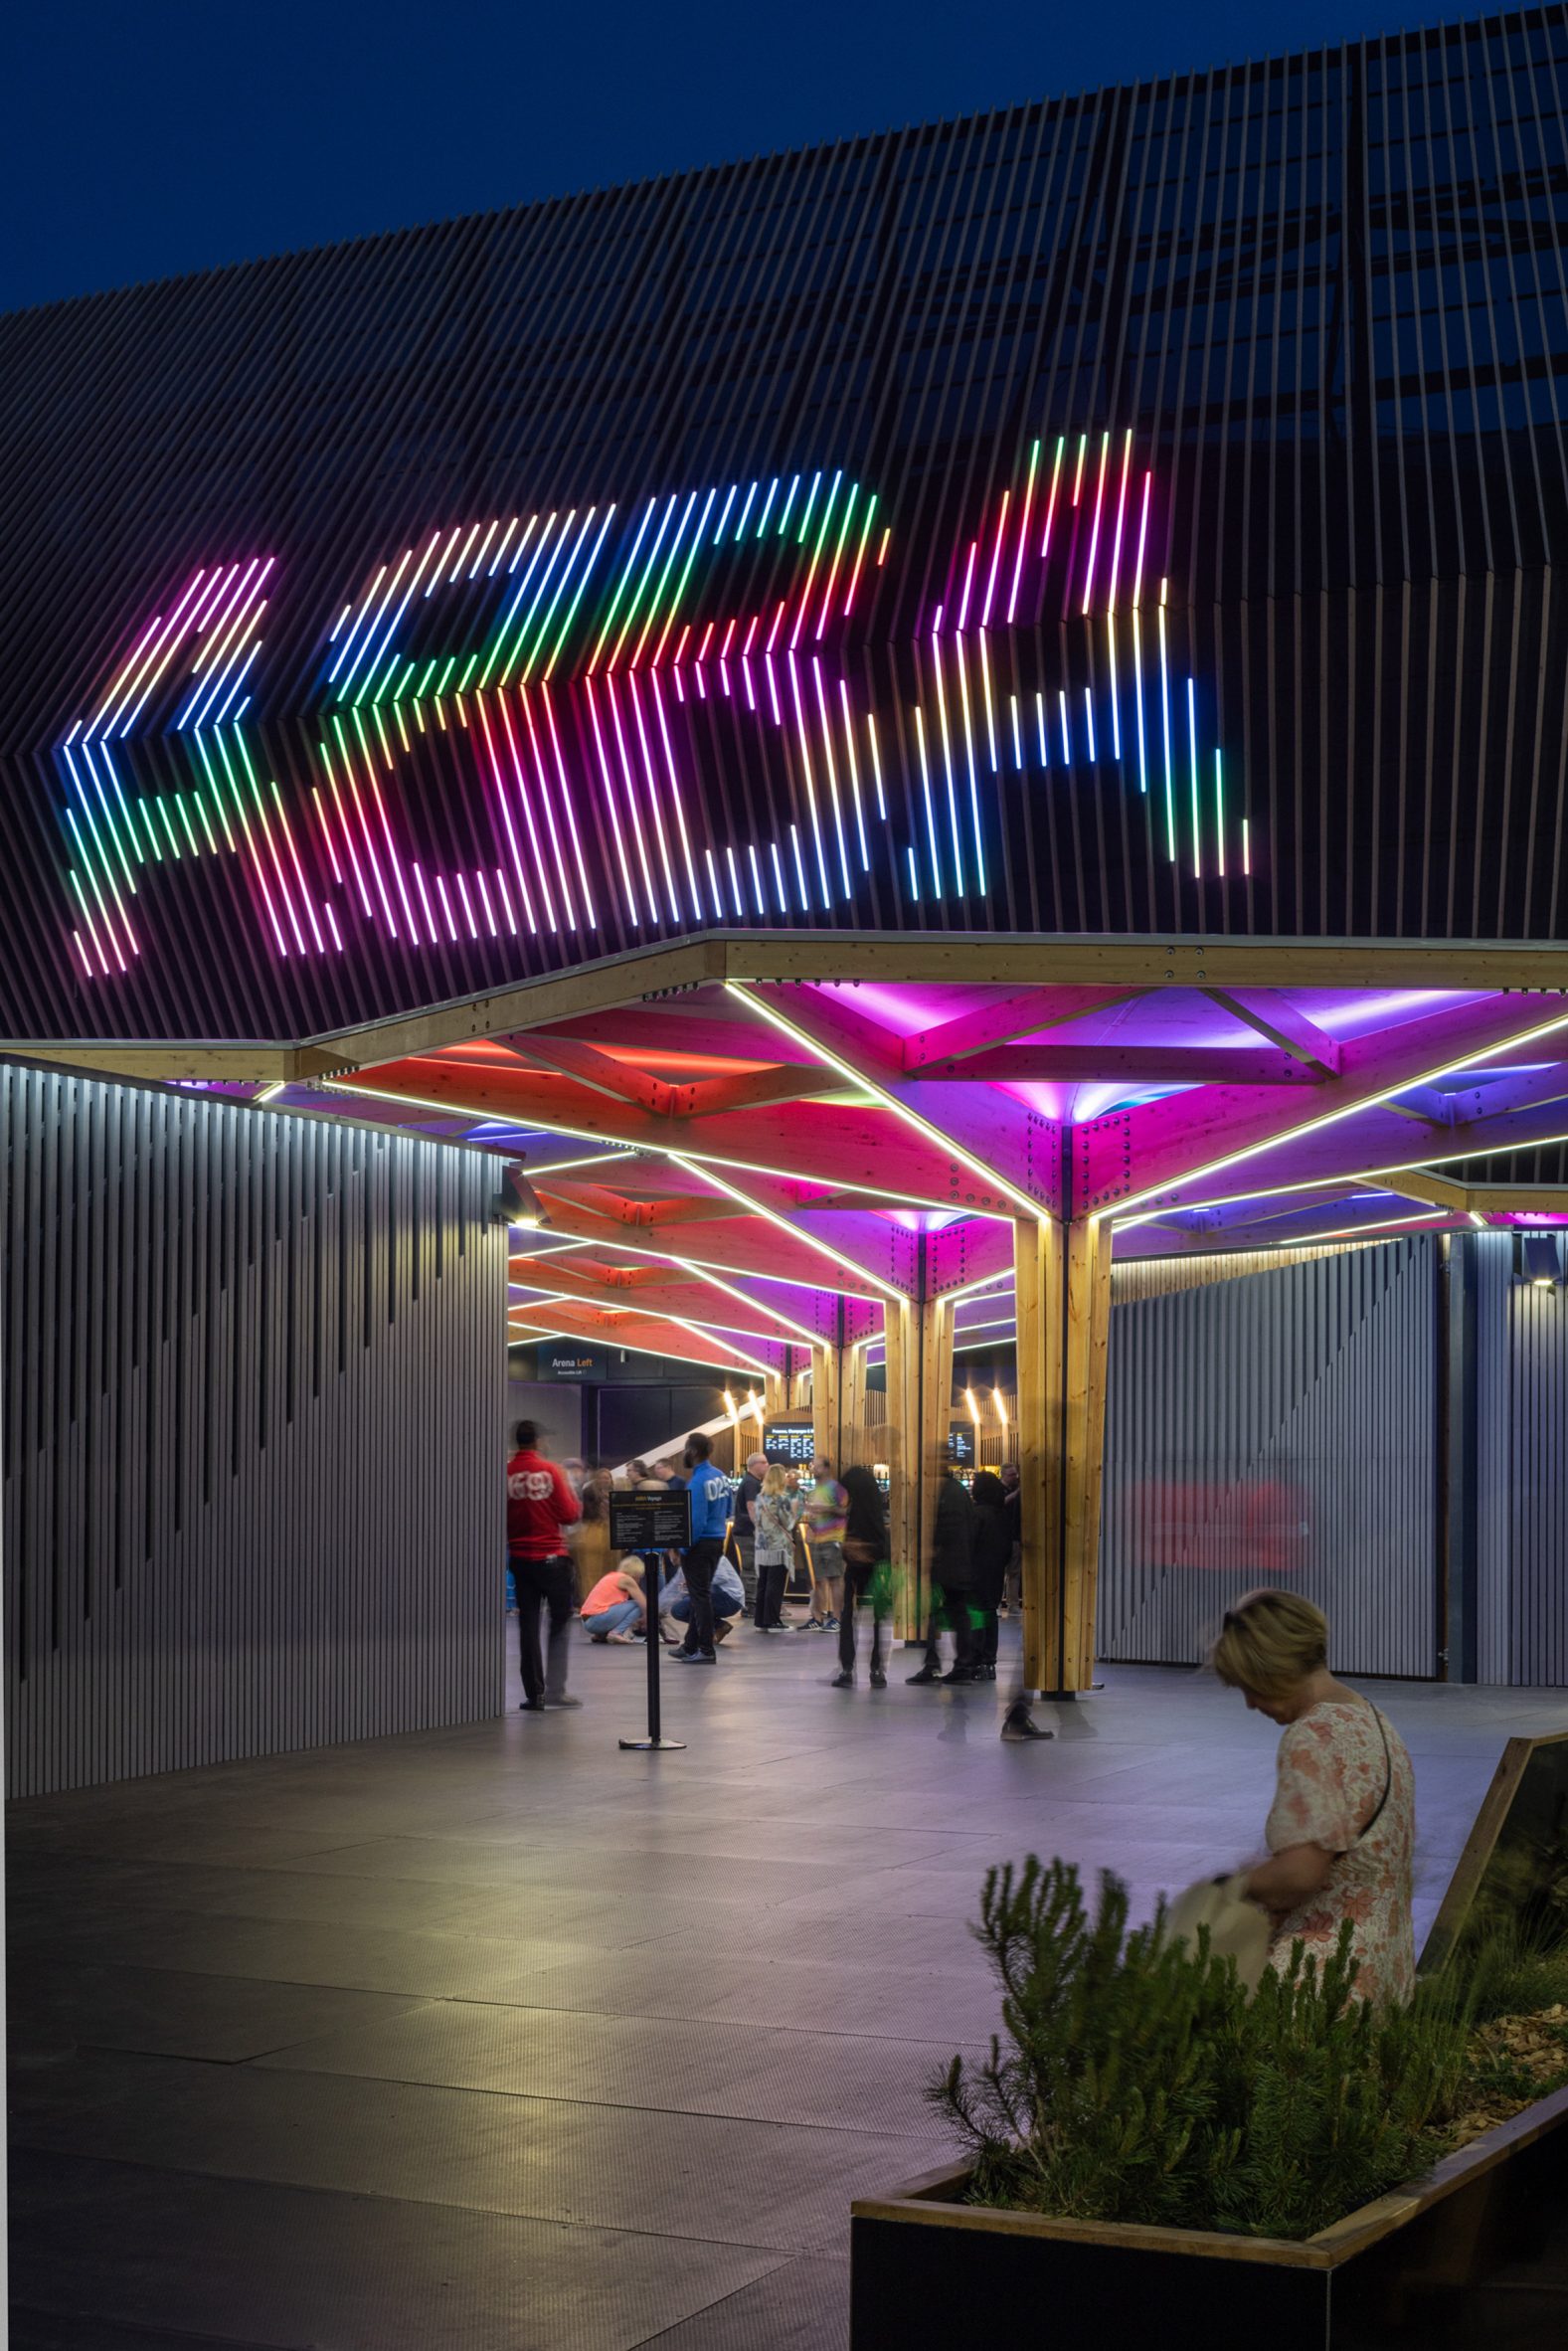 The ABBA Arena features an multicoloured LED ABBA logo